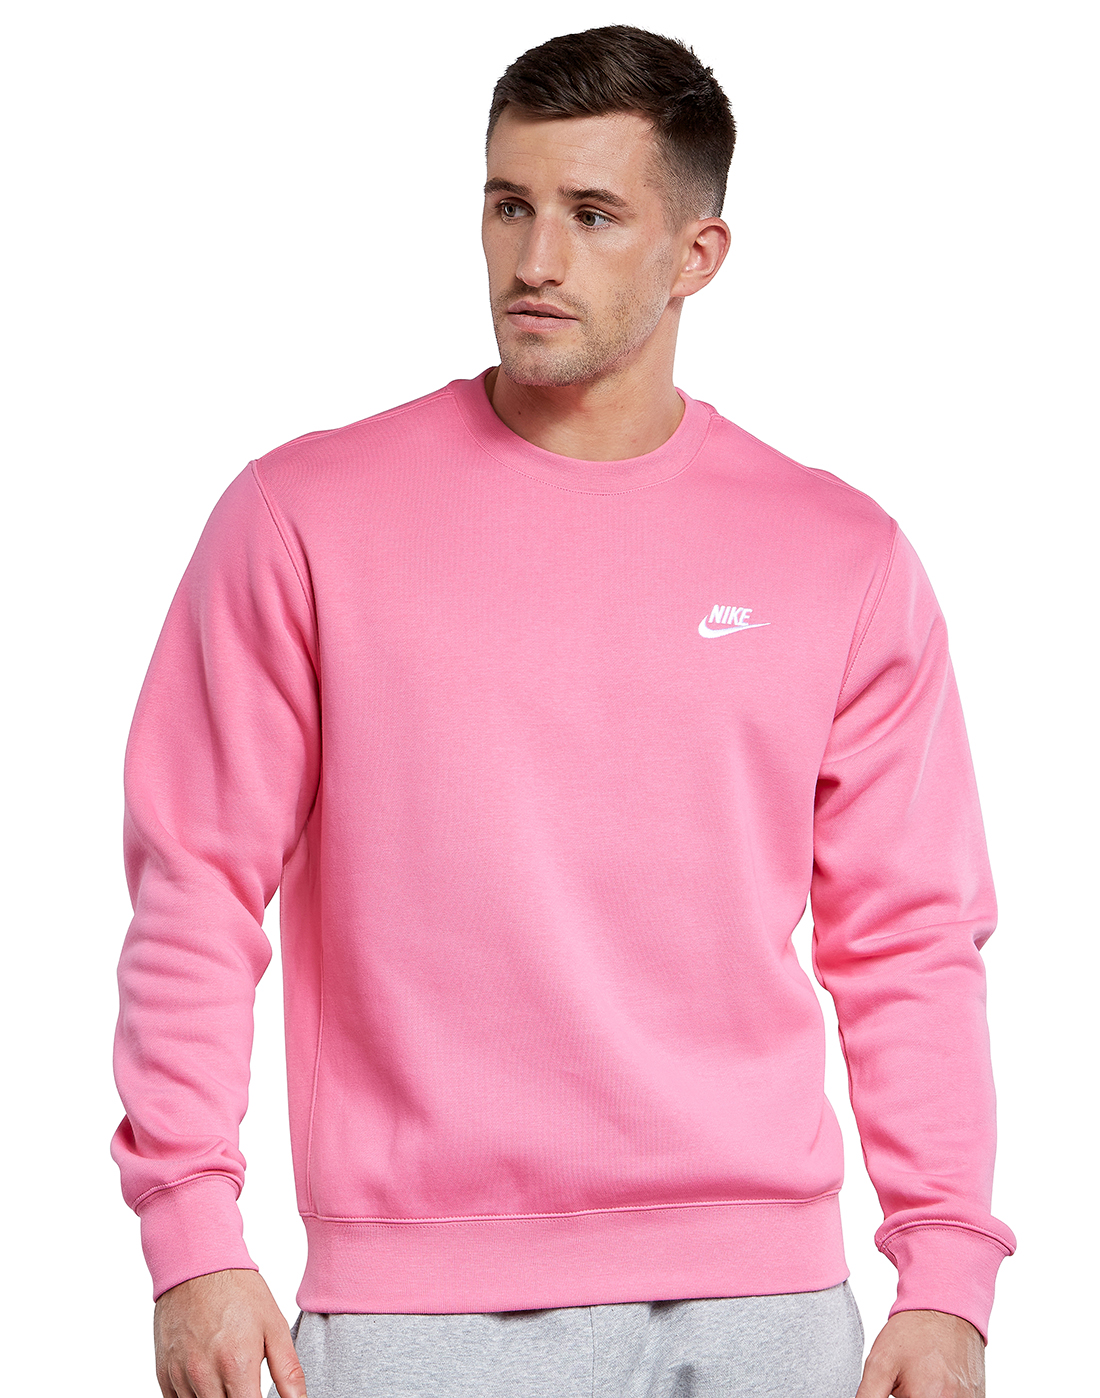 Nike Mens Club Crew Neck Sweatshirt - Pink | Life Style Sports EU